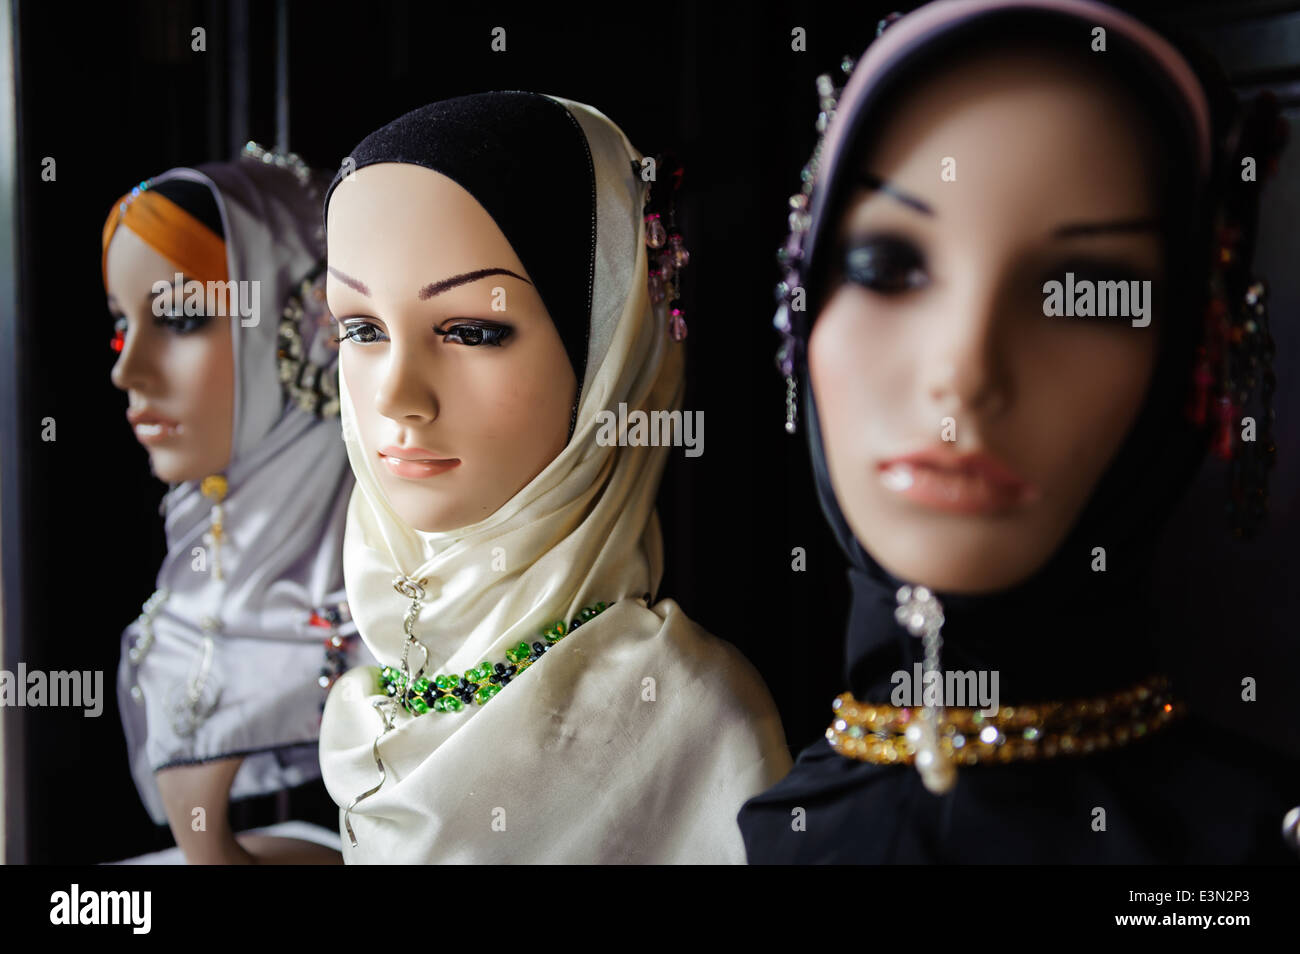 Maniqui de población musulmana, Kuching, Malasia Foto de stock